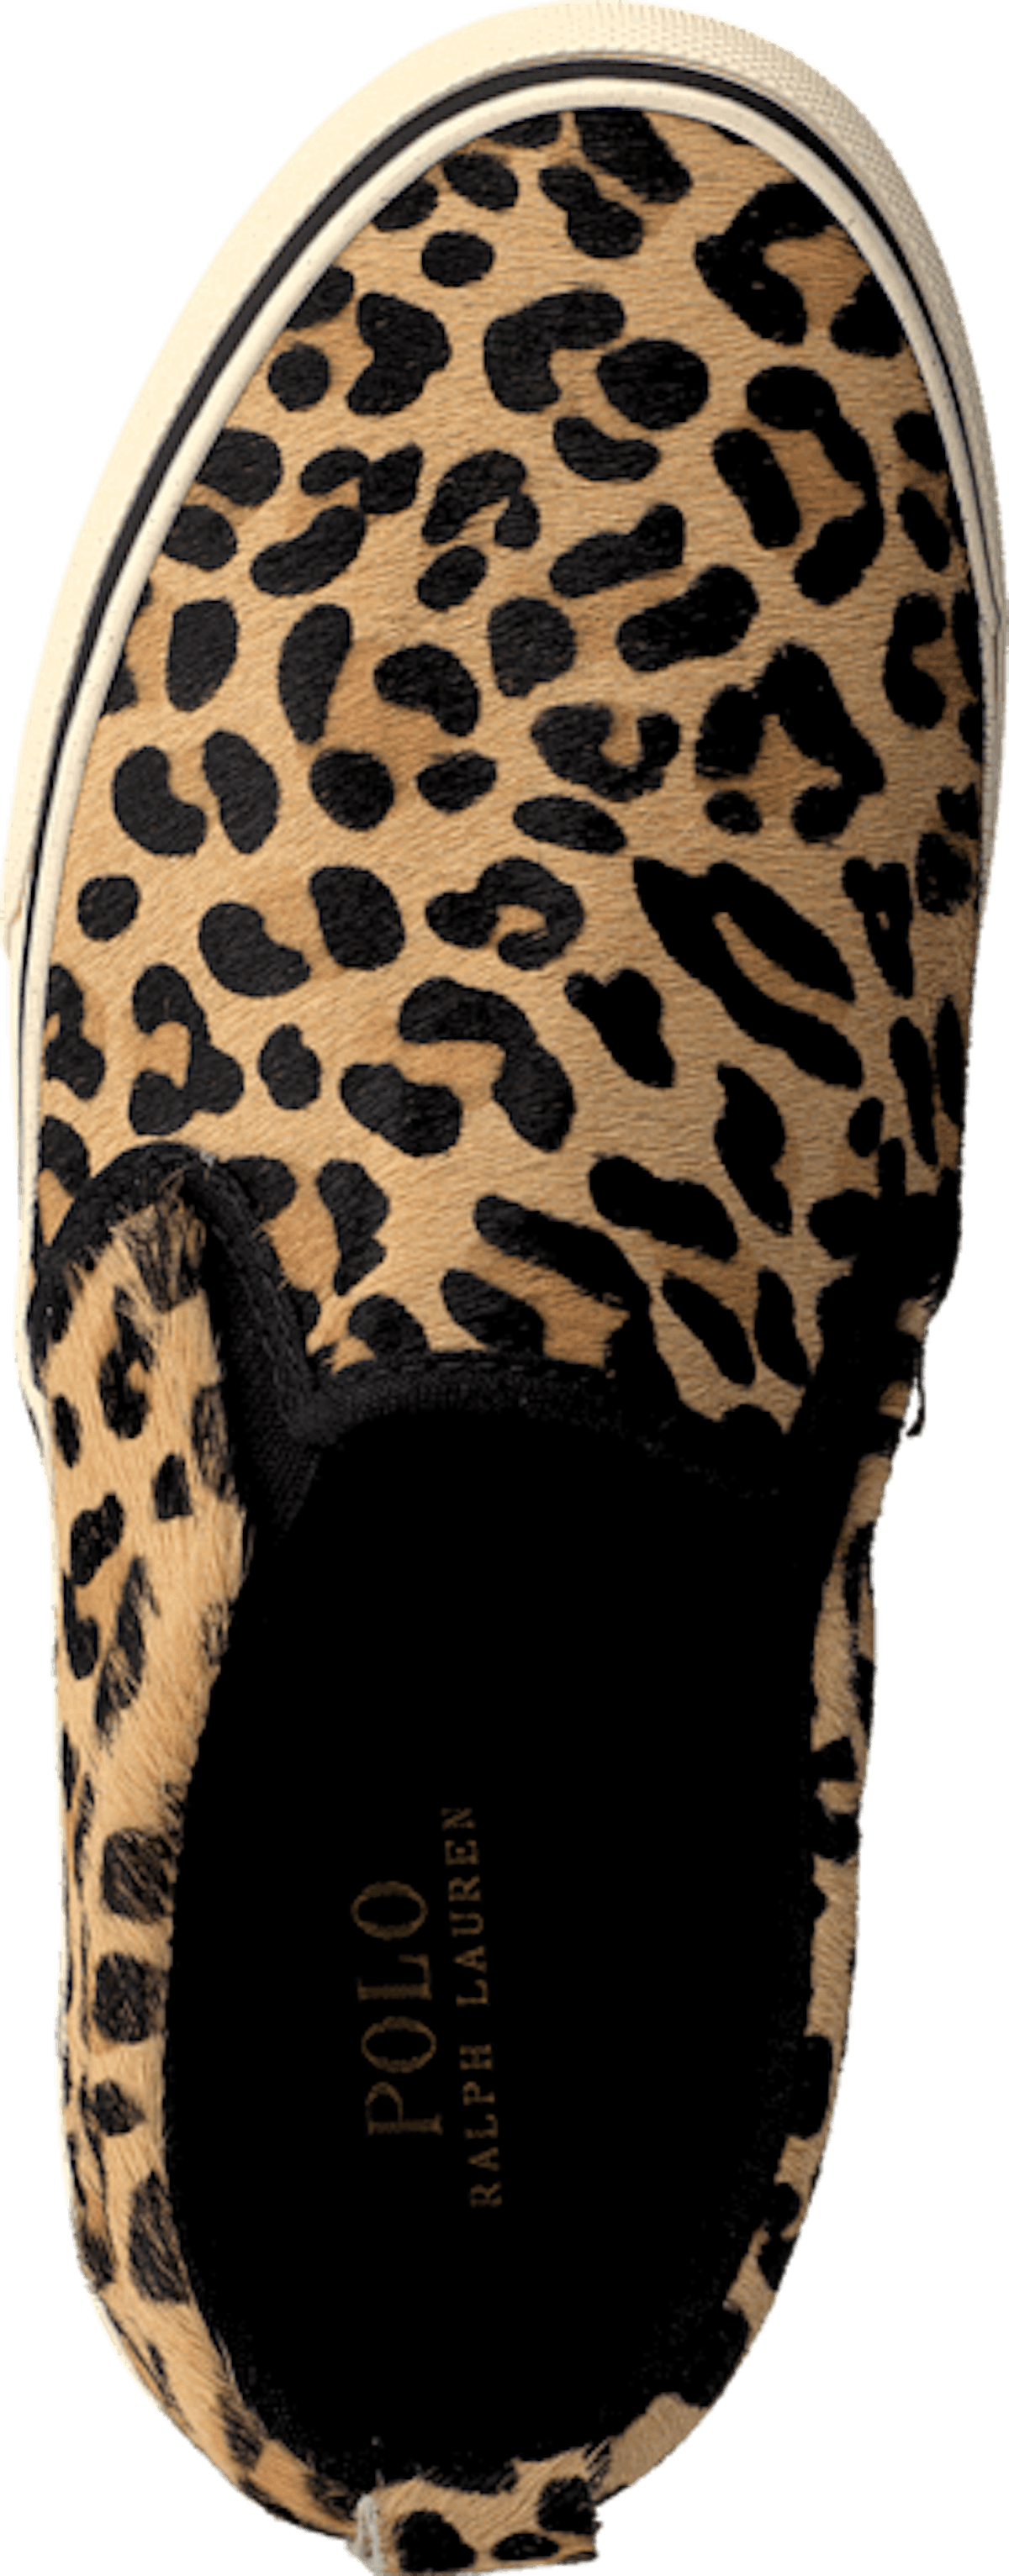 CarleeTwin Gorw Leopard